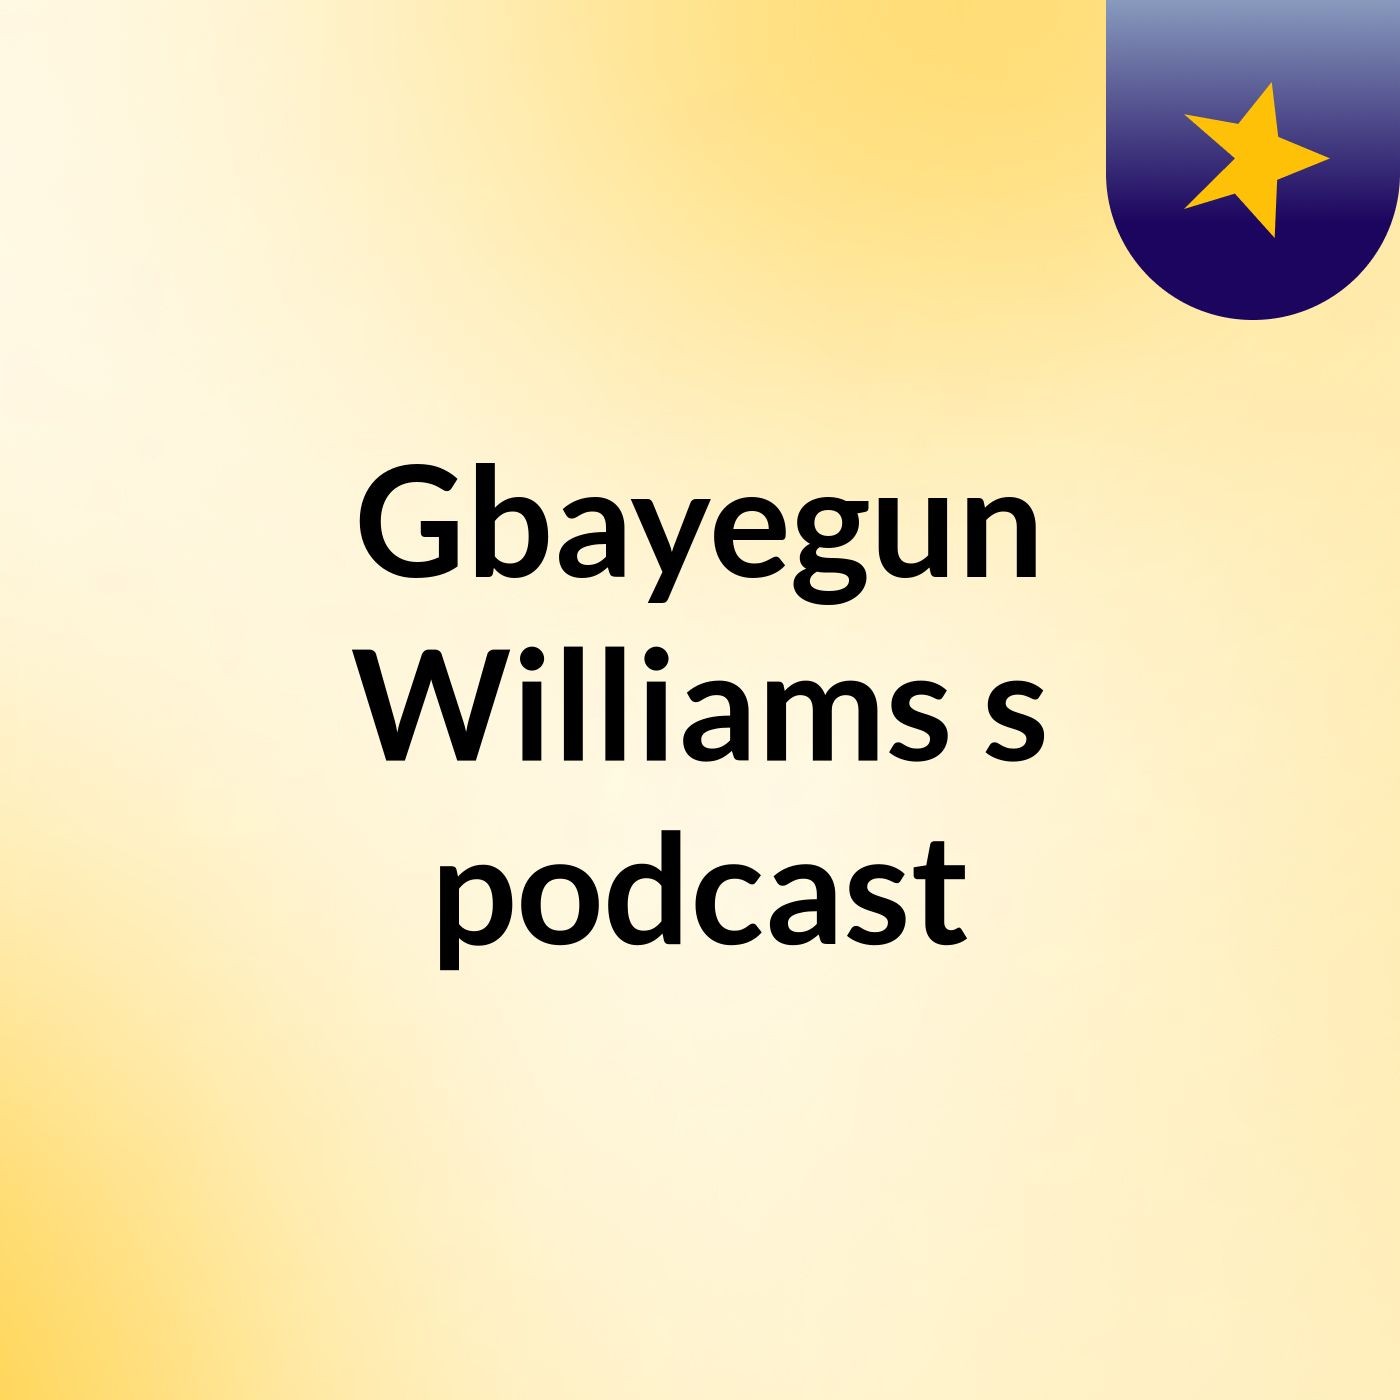 Gbayegun Williams's podcast